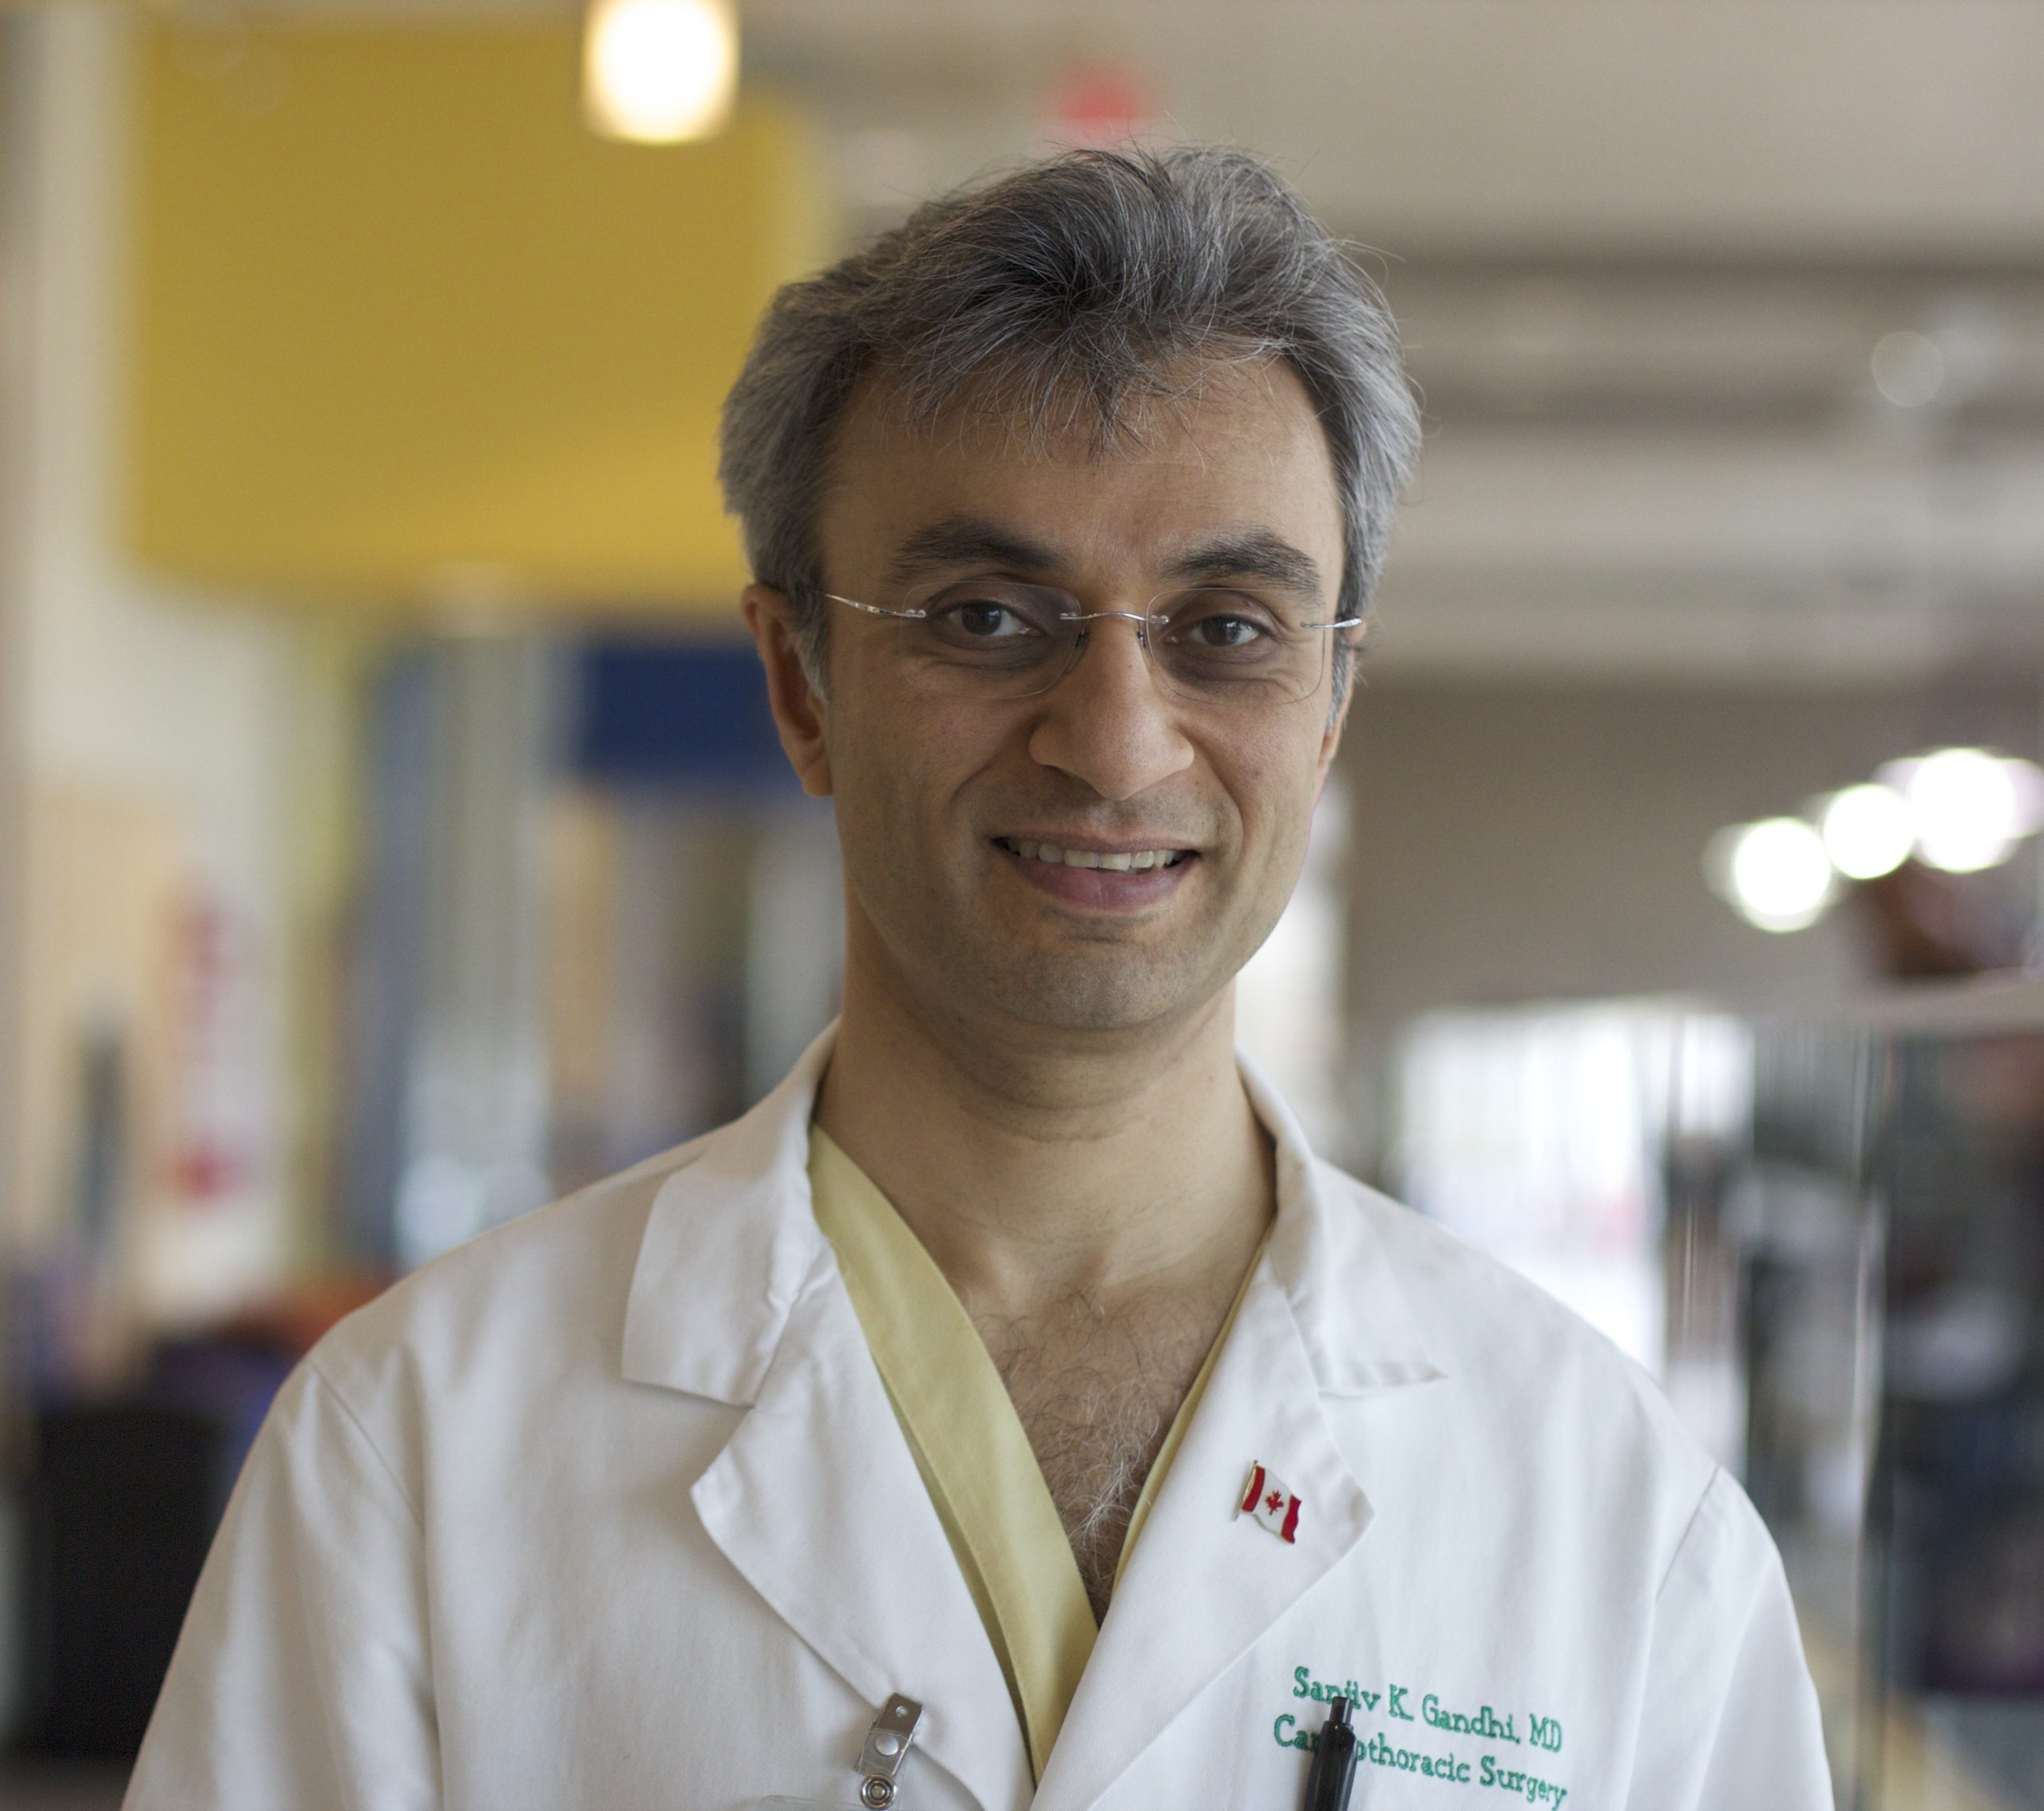 Dr. Sanjiv Gandhi is a Cardiac Surgeon at the BC Children's Hospital